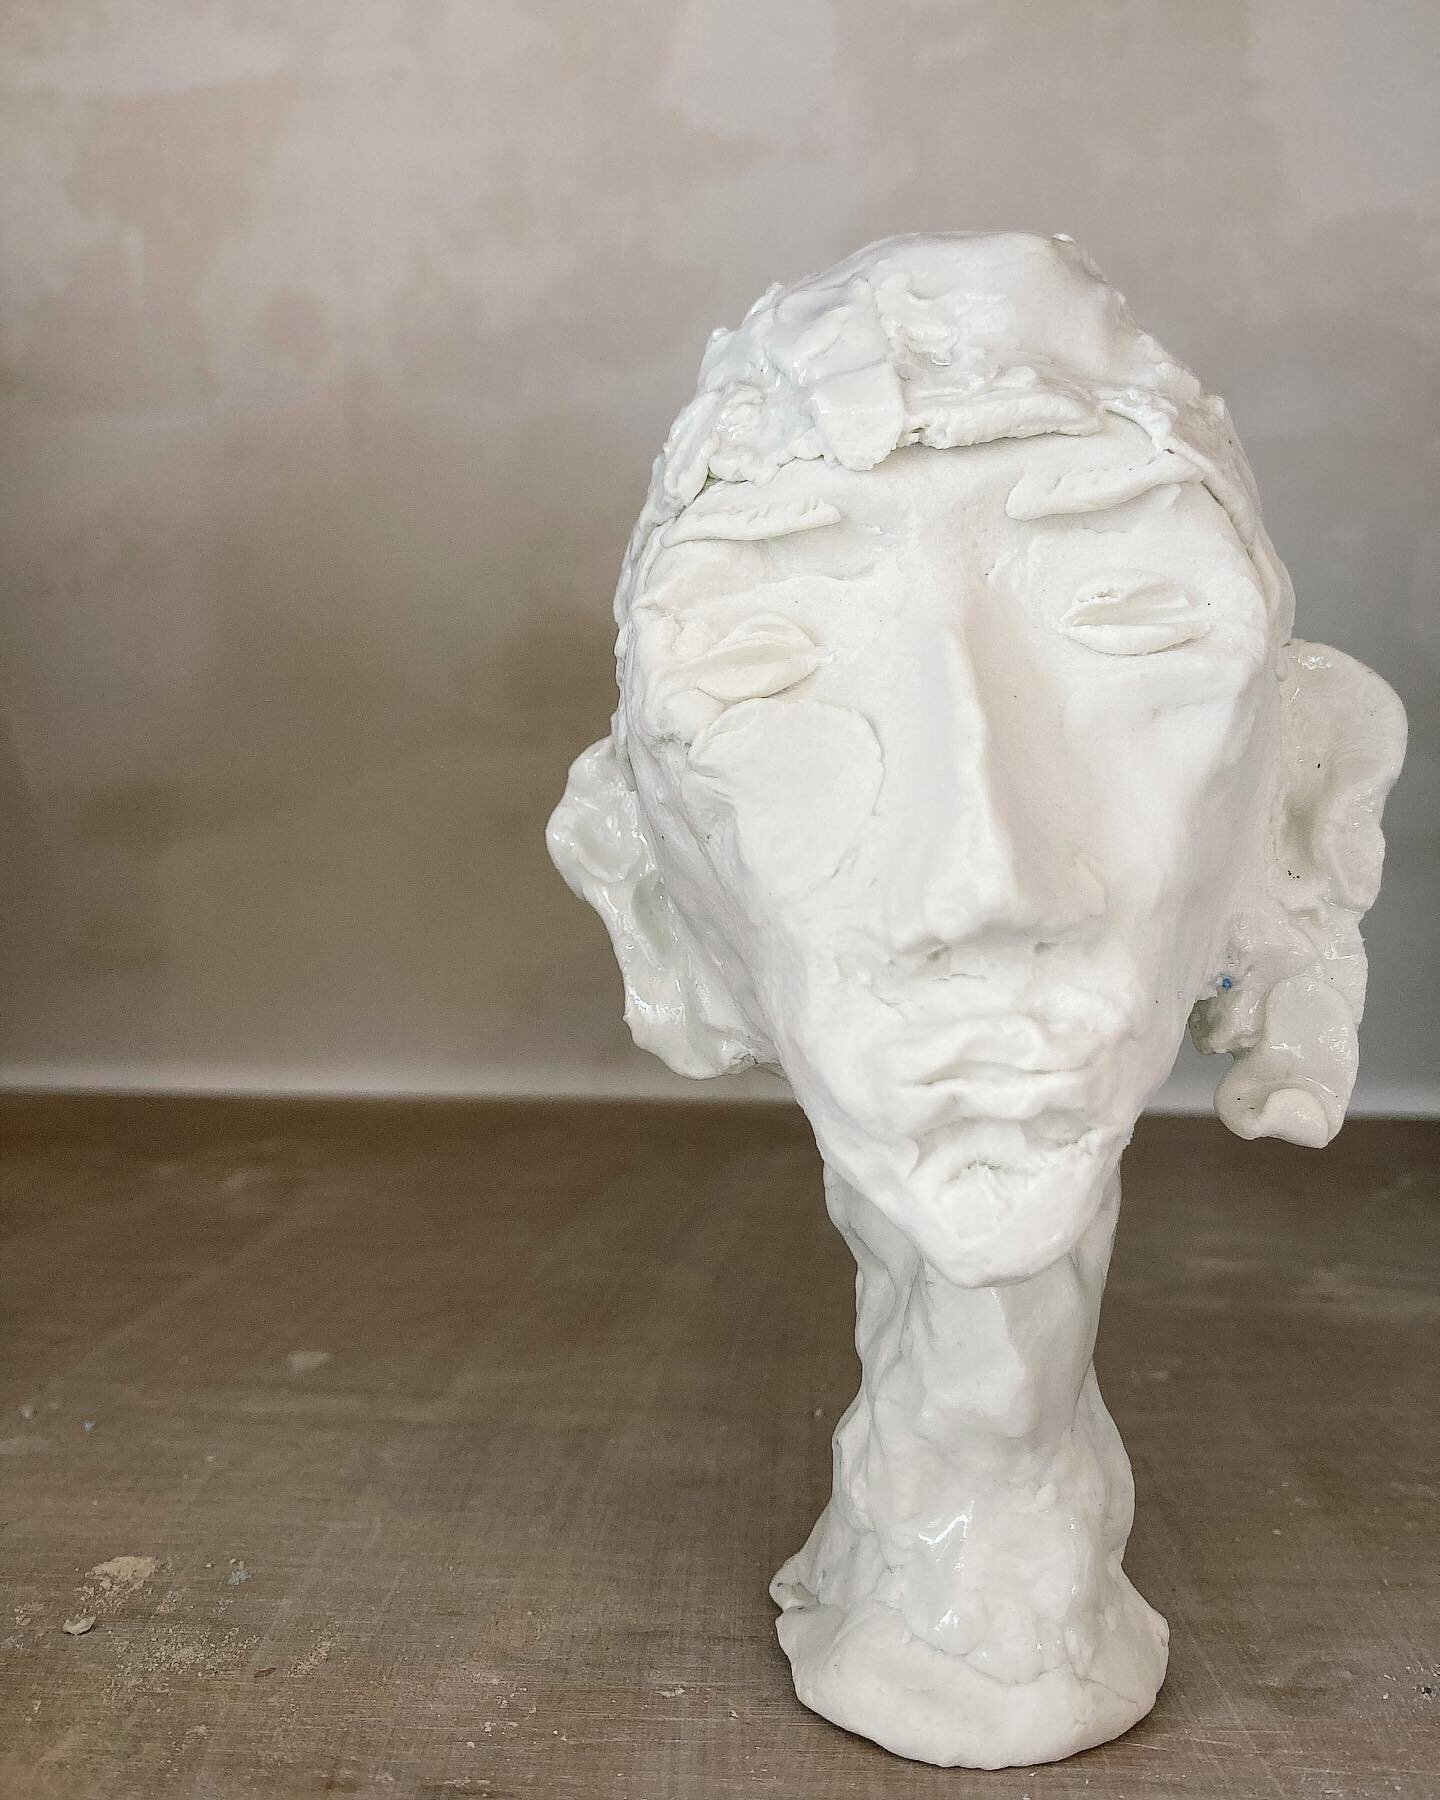 👤 14 cm

#paperclaysculpture